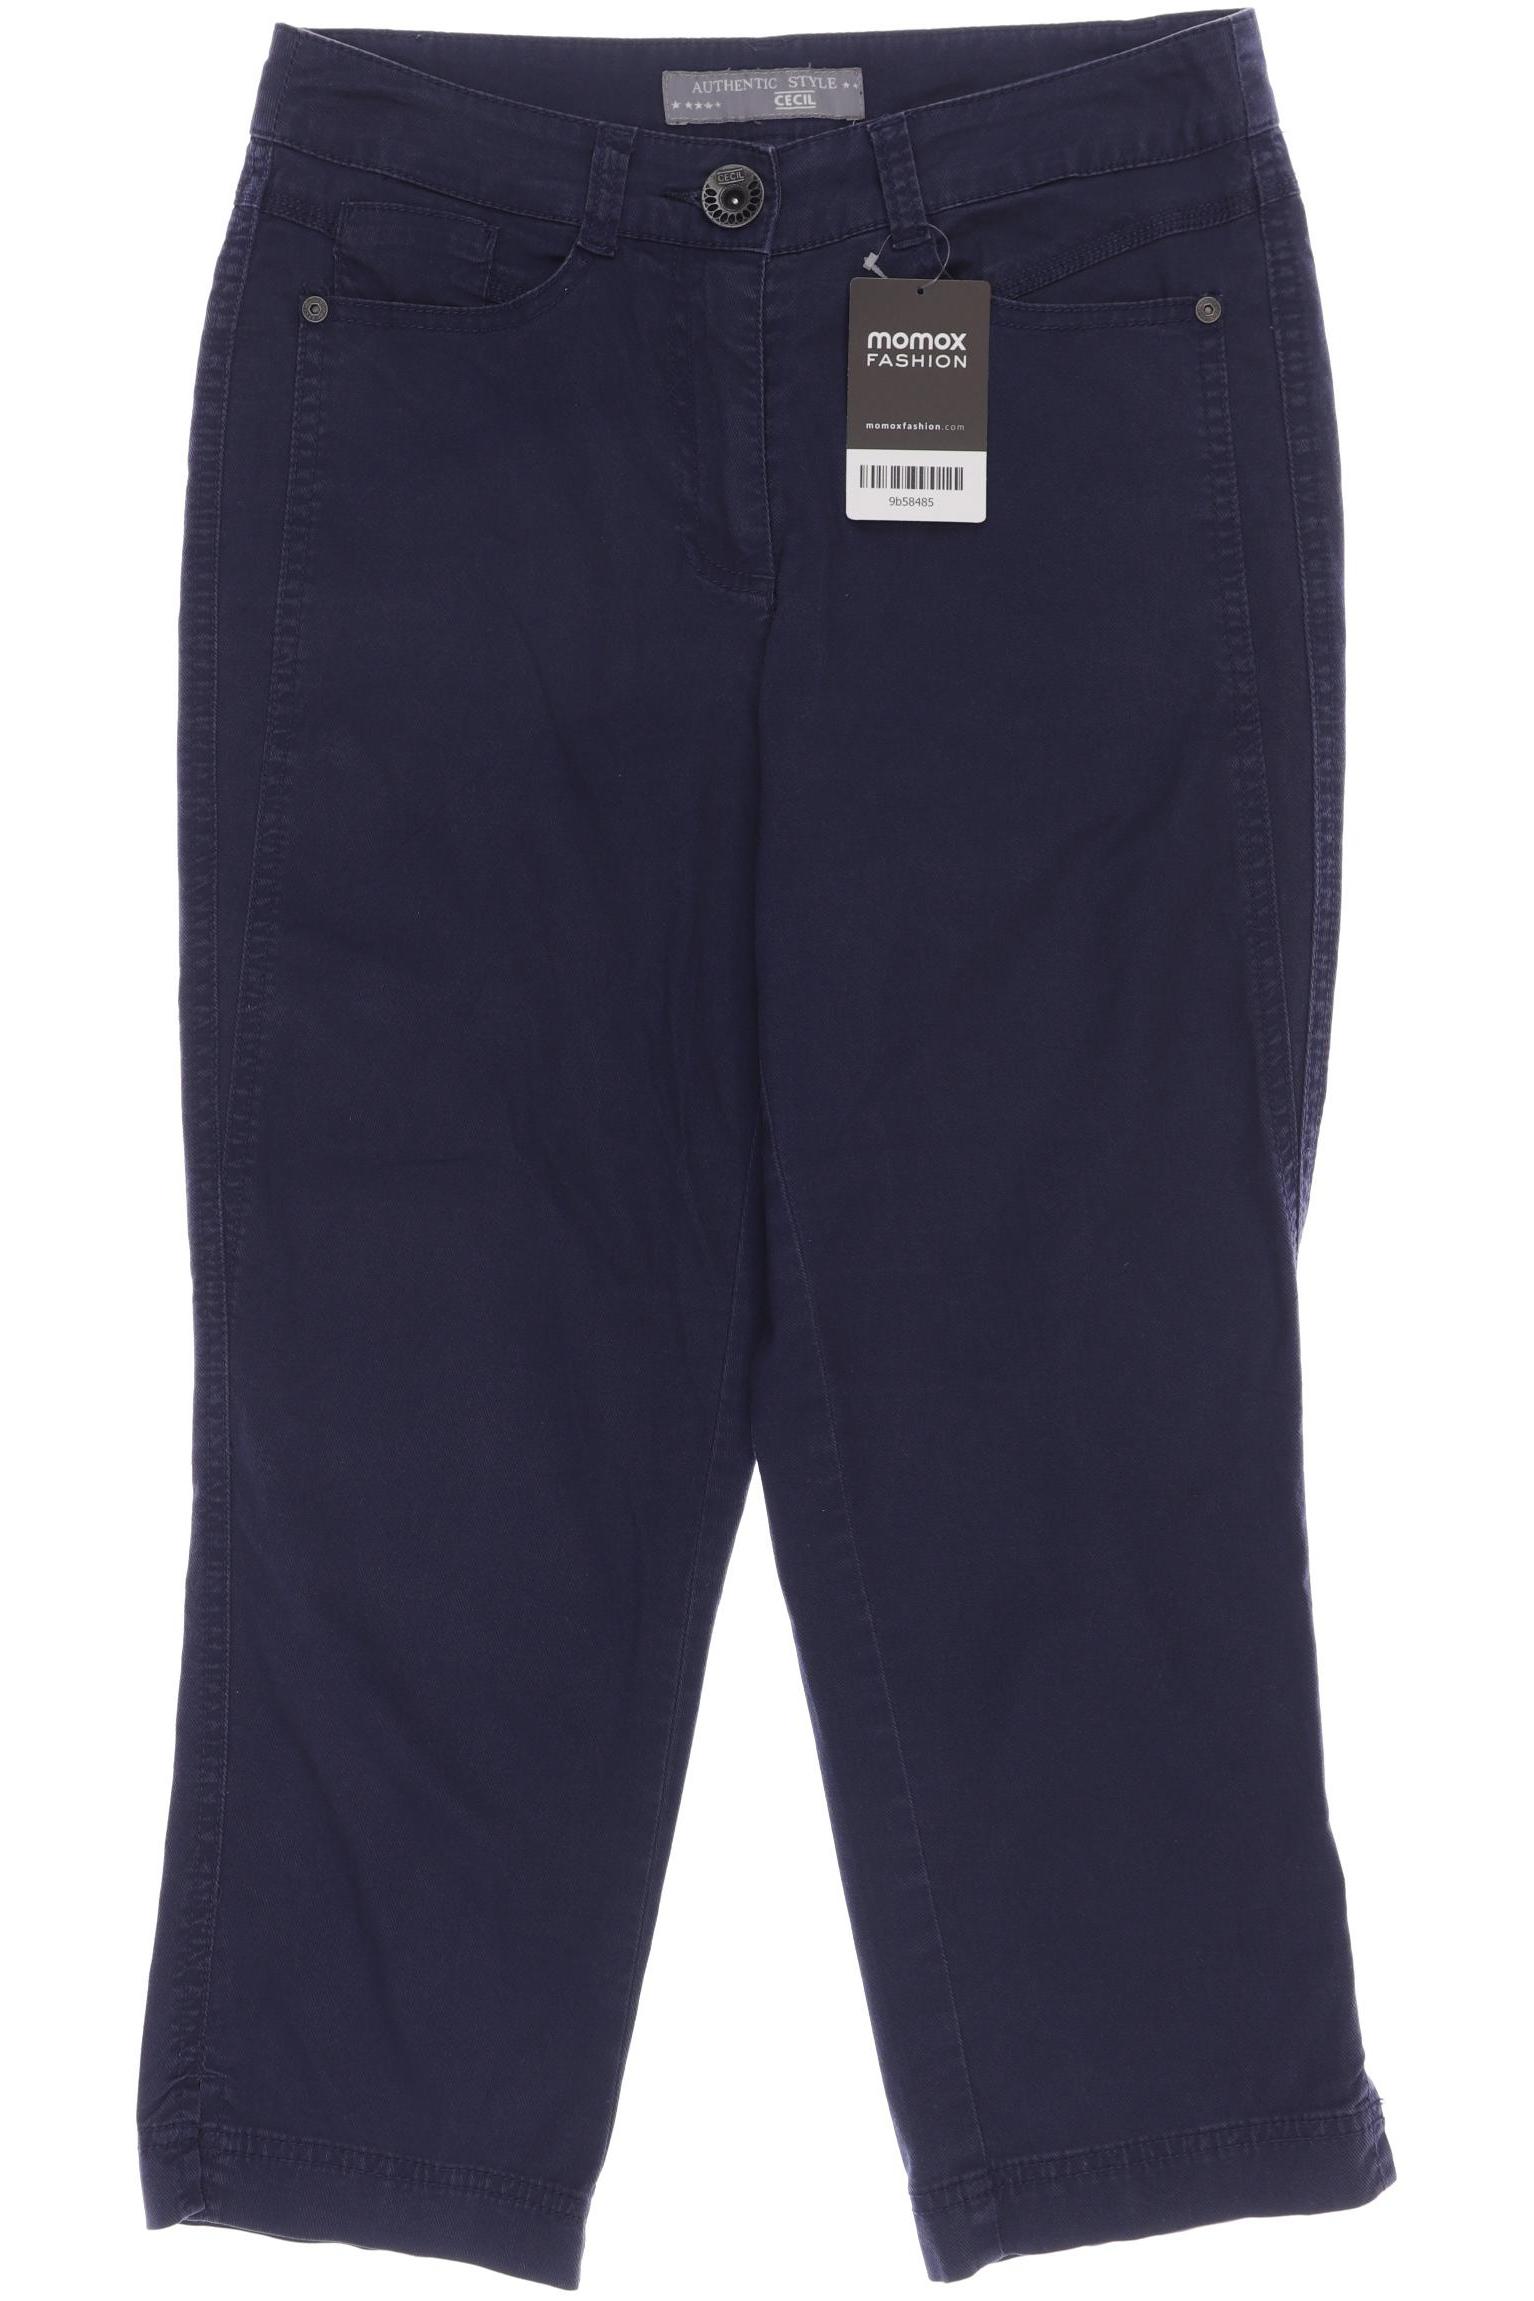 Cecil Damen Jeans, blau, Gr. 36 von cecil